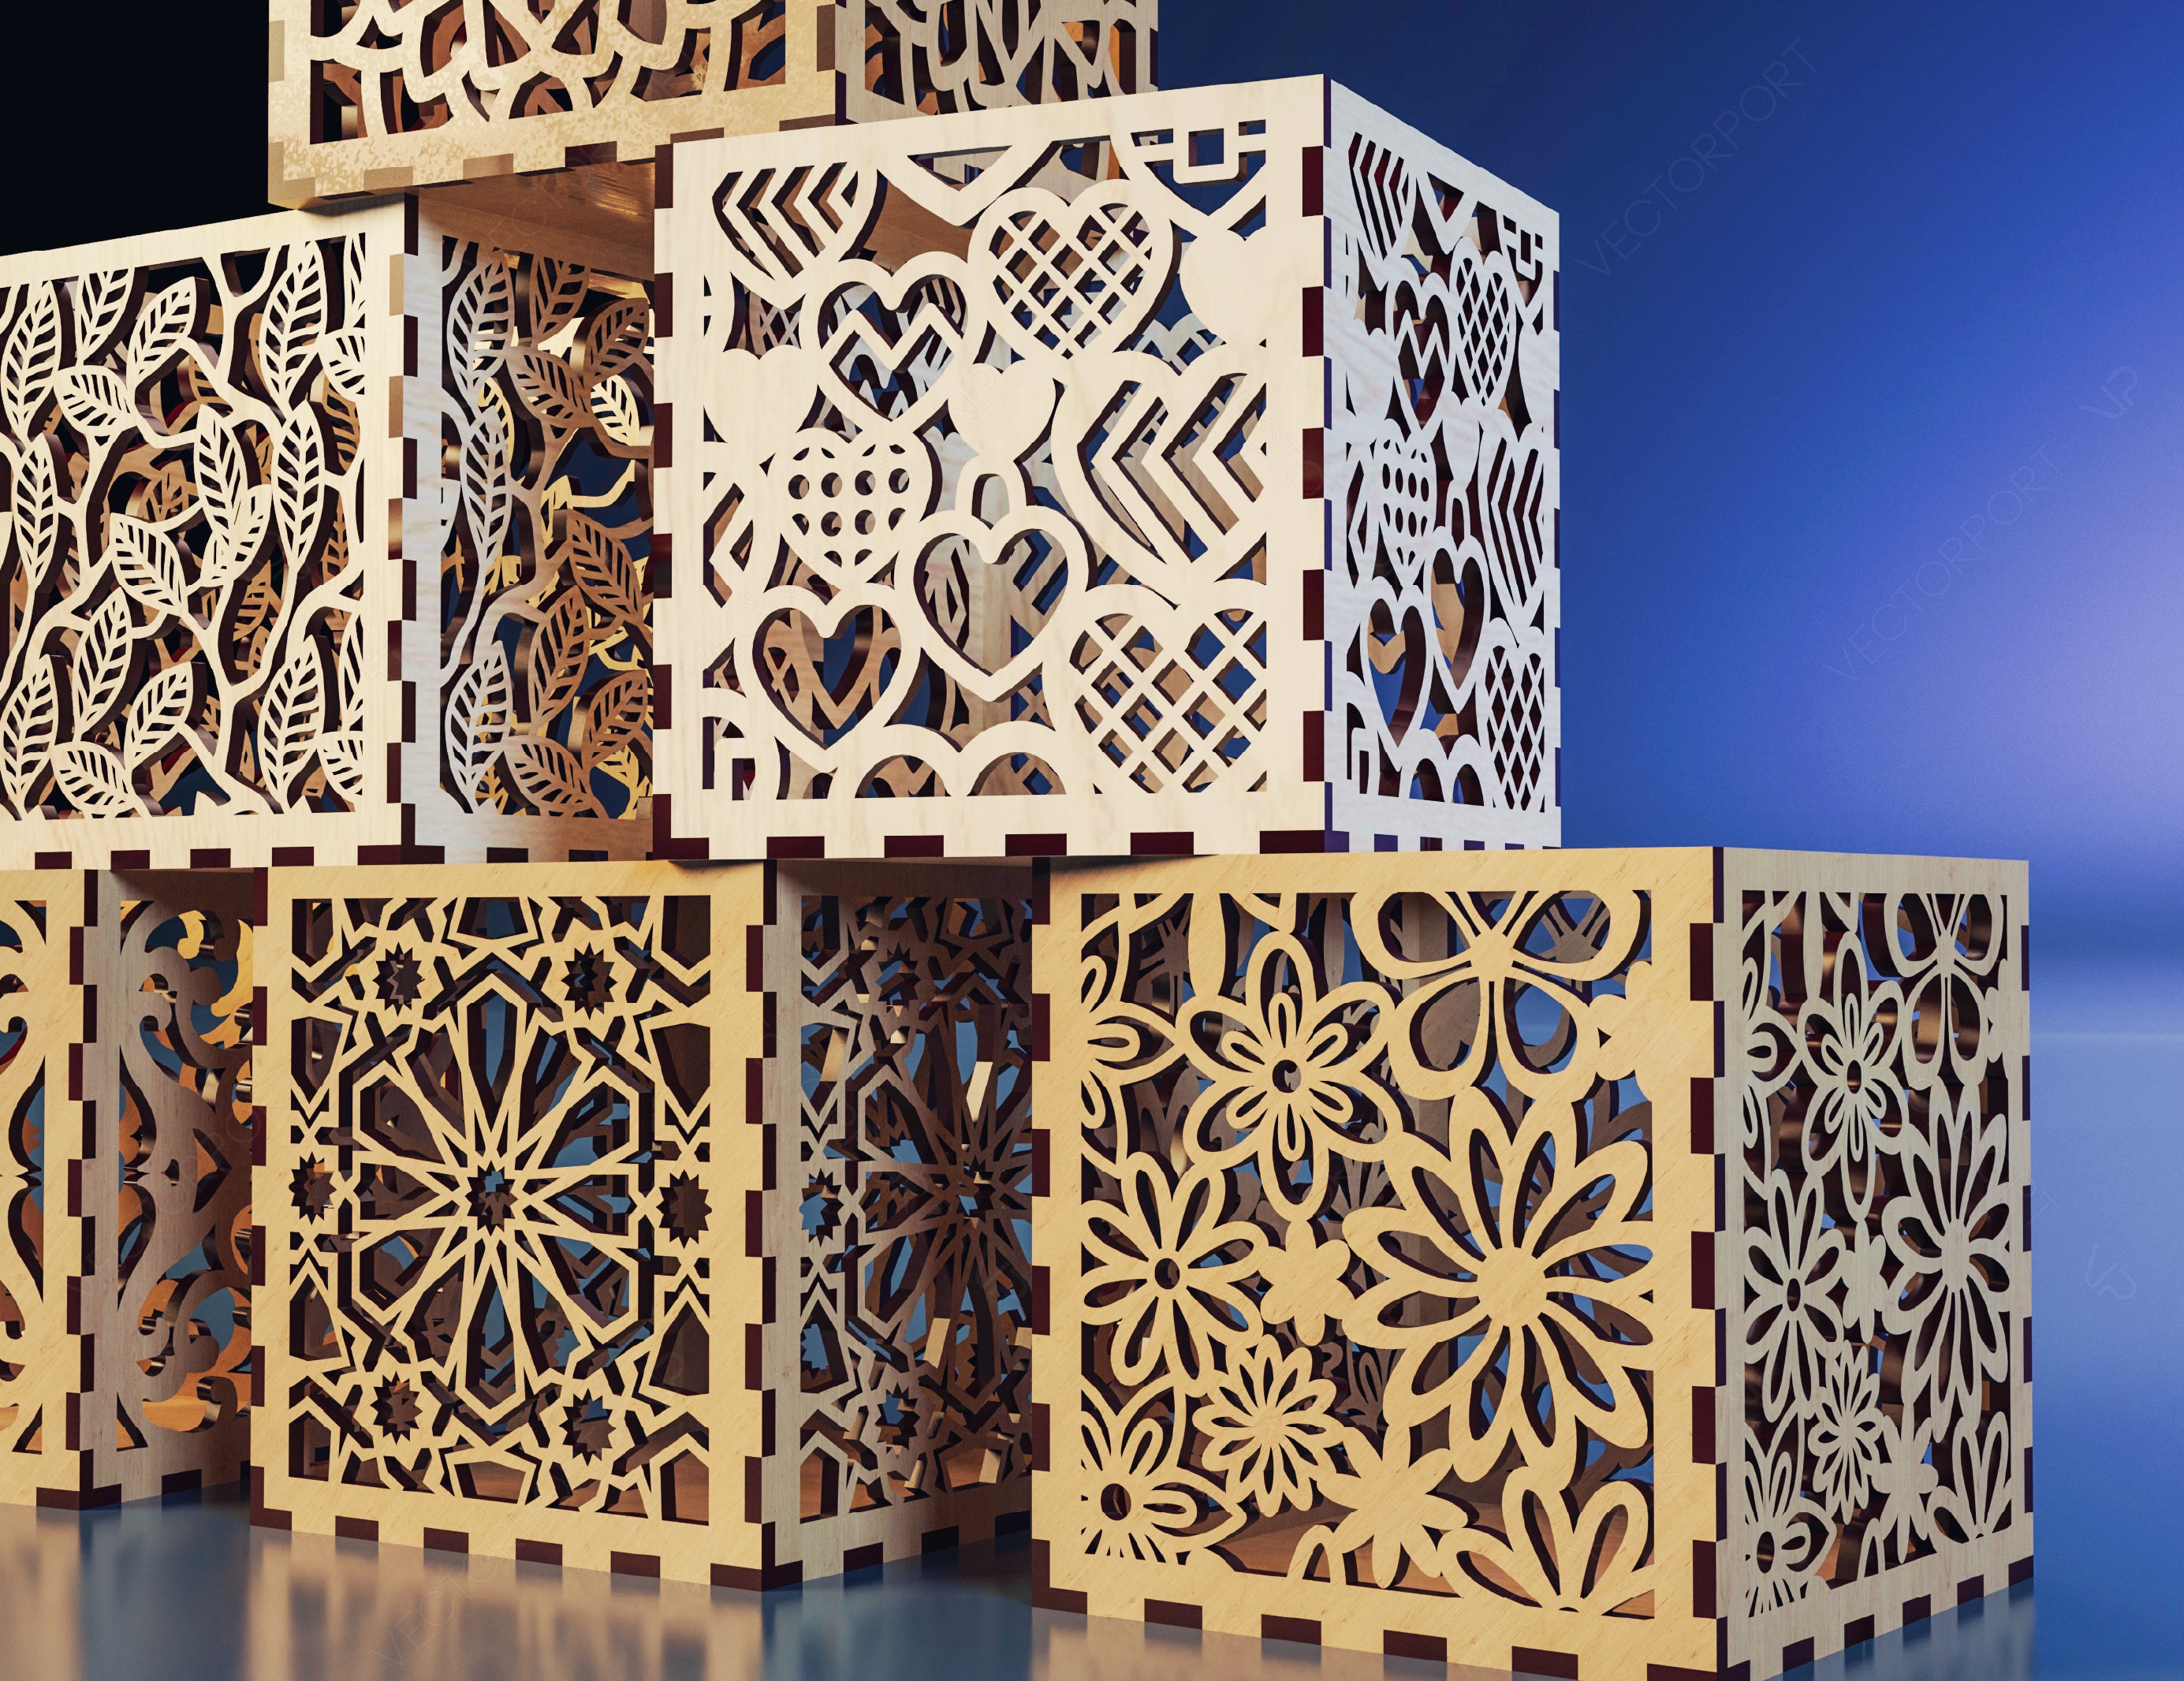 Decorative Laser Cutting Wooden Box Geometric Ornamental Gift Box Candle holder template Wedding Glowforge | SVG, DXF |#U062|